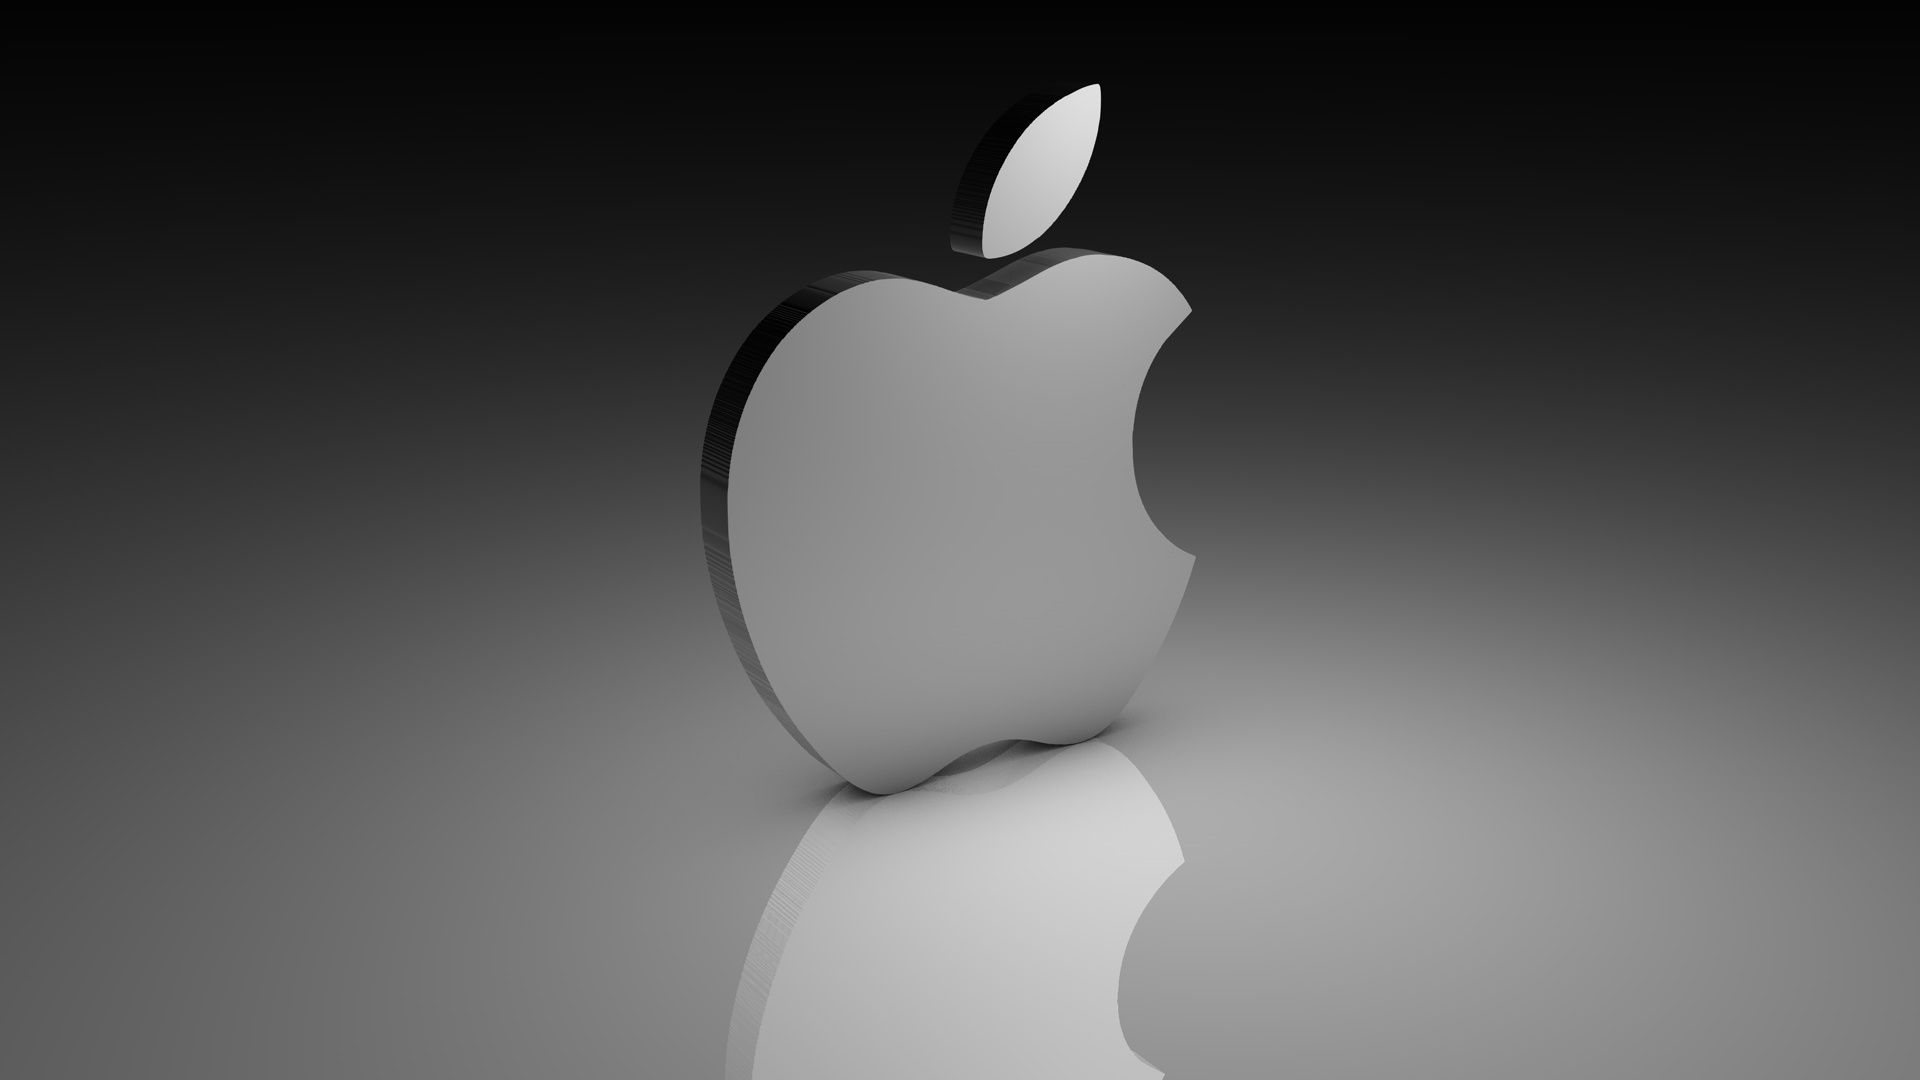 Desktop apple logo hd wallpaper download